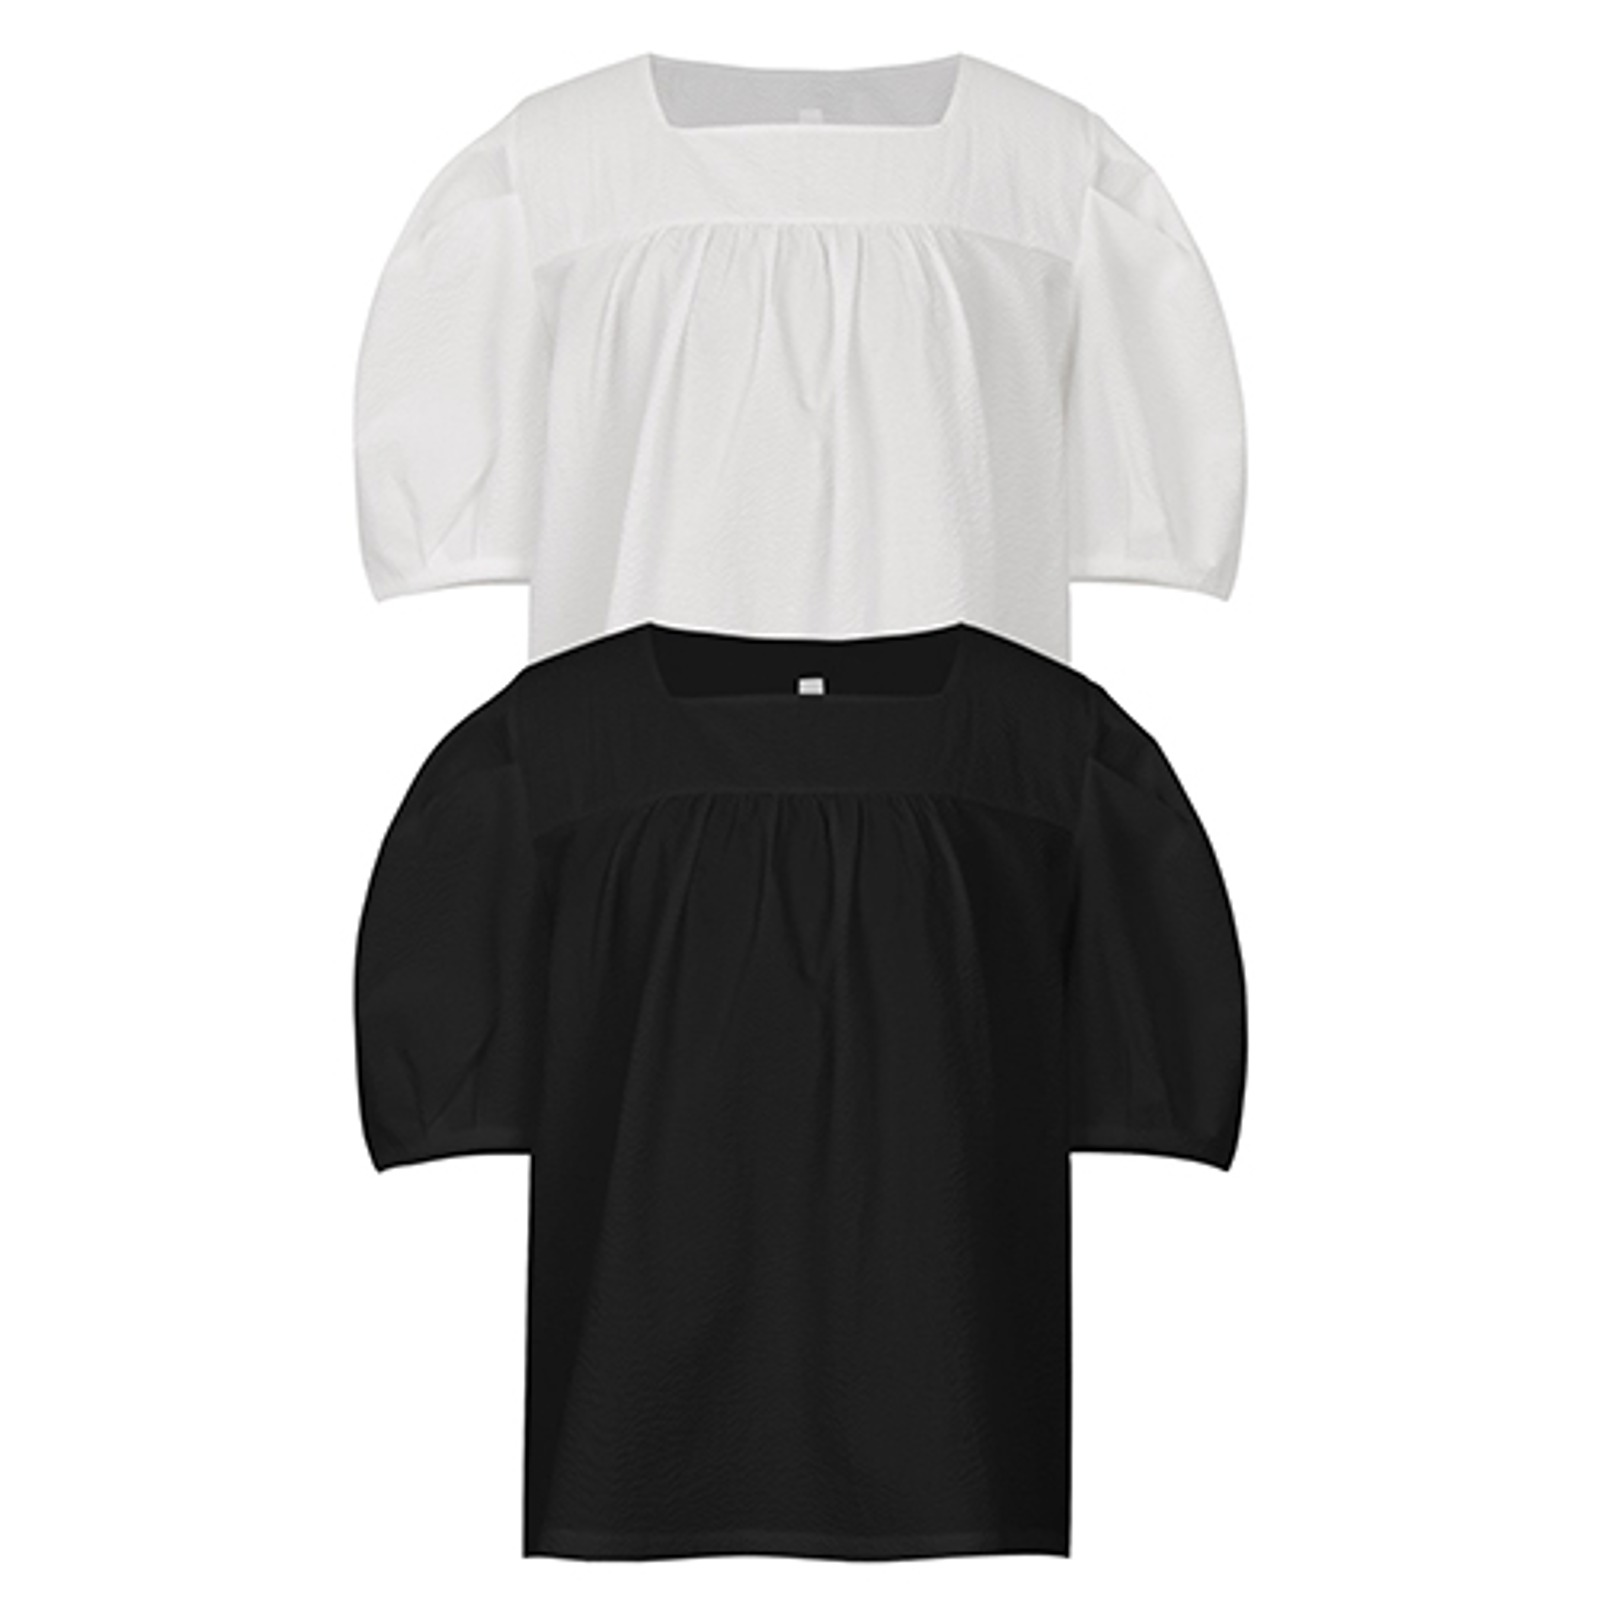 W. Embo blouse Black/White [ 45,000-&gt;25,000 5/16 11:00~5/18 ]